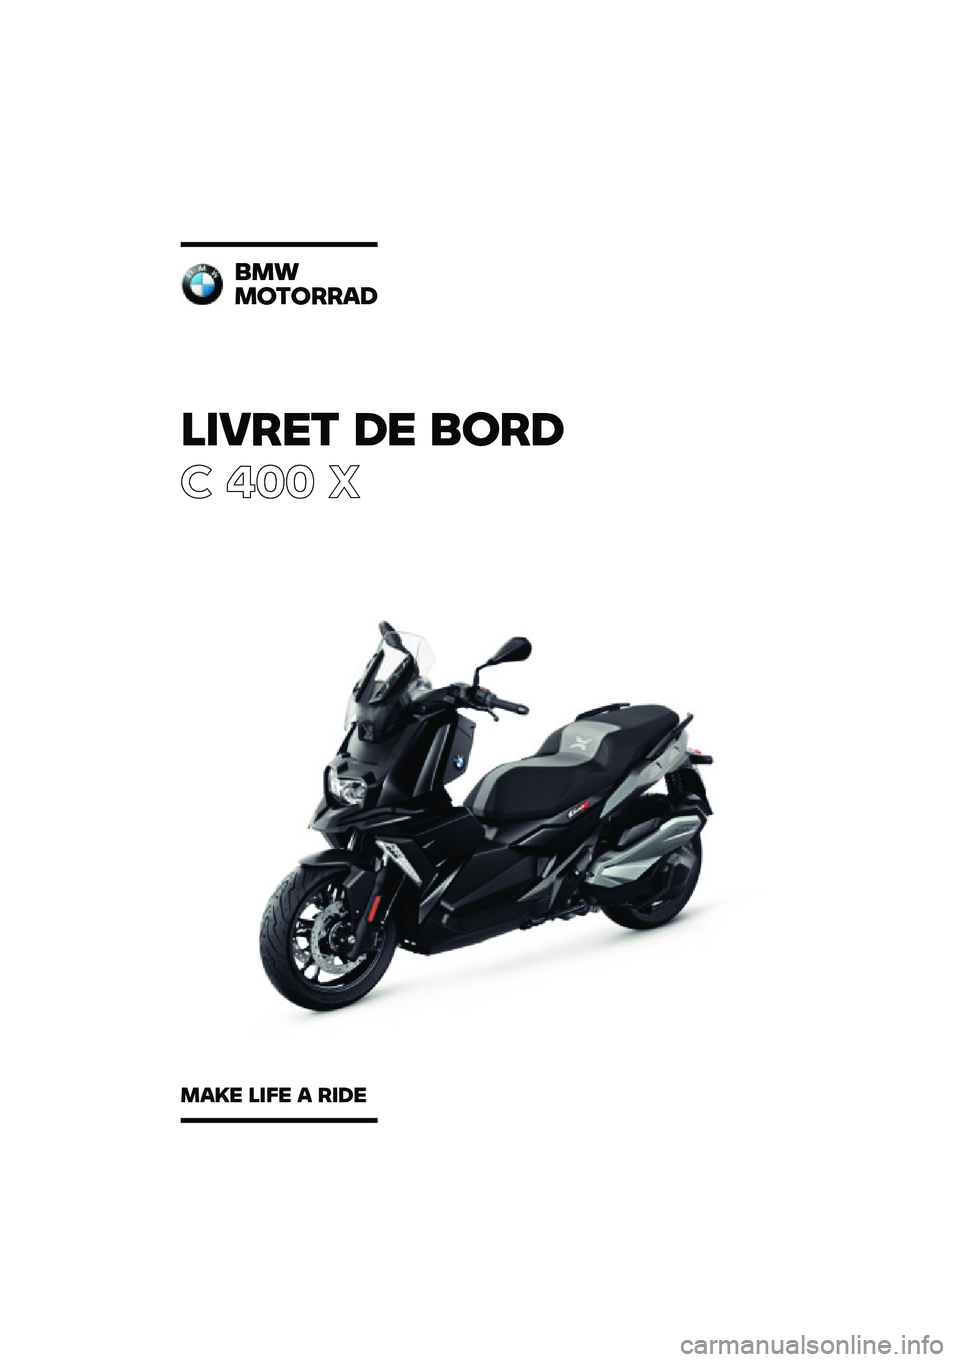 BMW MOTORRAD C 400 X 2020  Livret de bord (in French) ������ �\b� �	�
��\b
� ��� �
�	��\f
��
��
���
�\b
��
�� ���� �
 ���\b� 